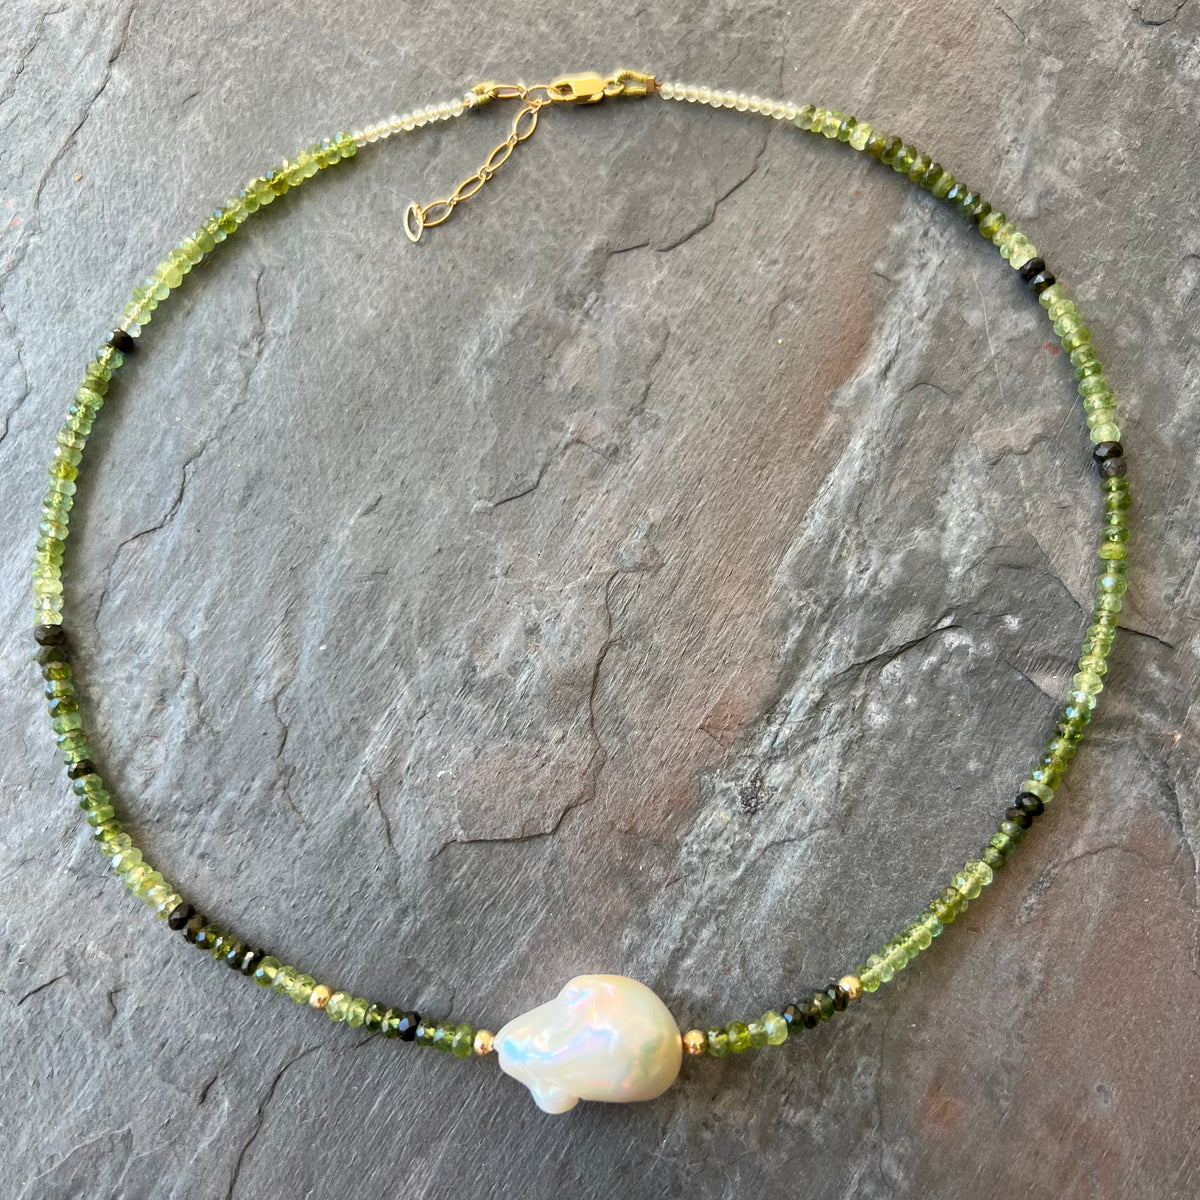 Green tourmaline baroque pearl necklace handmade by Garden of Silver. www.gardenofsilver.com